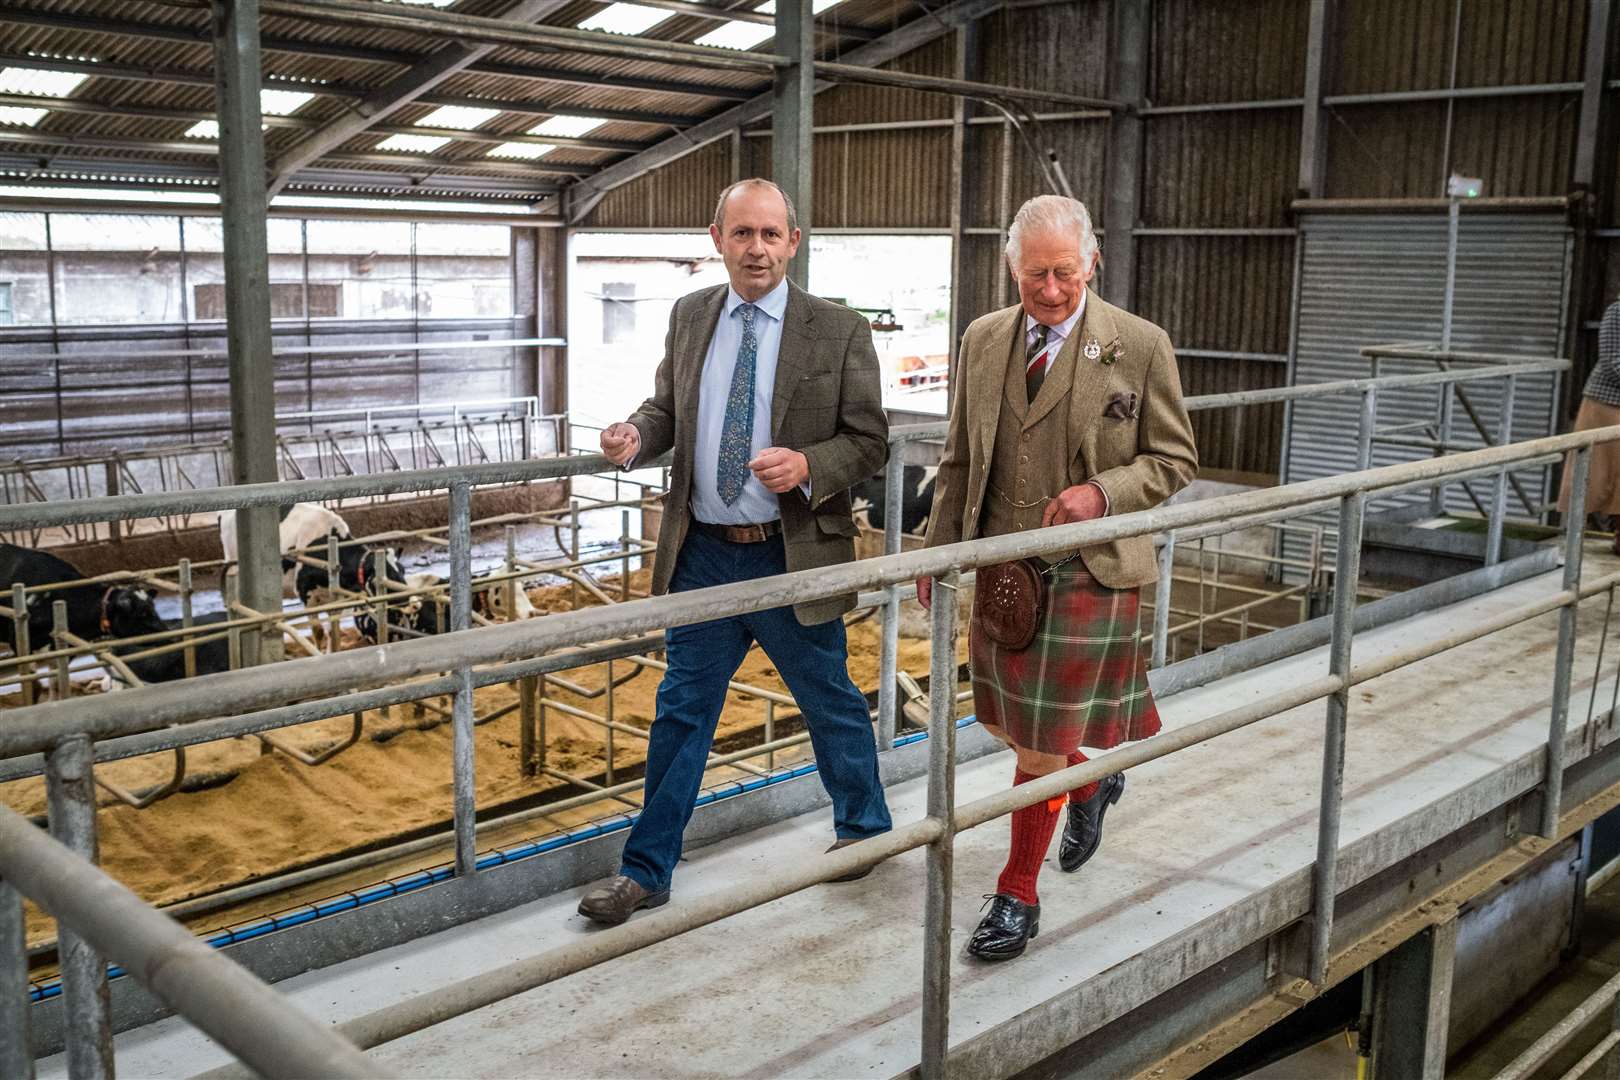 Charles met cows at Aberdeenshire’s Rora dairy (Chris Watt/PA)